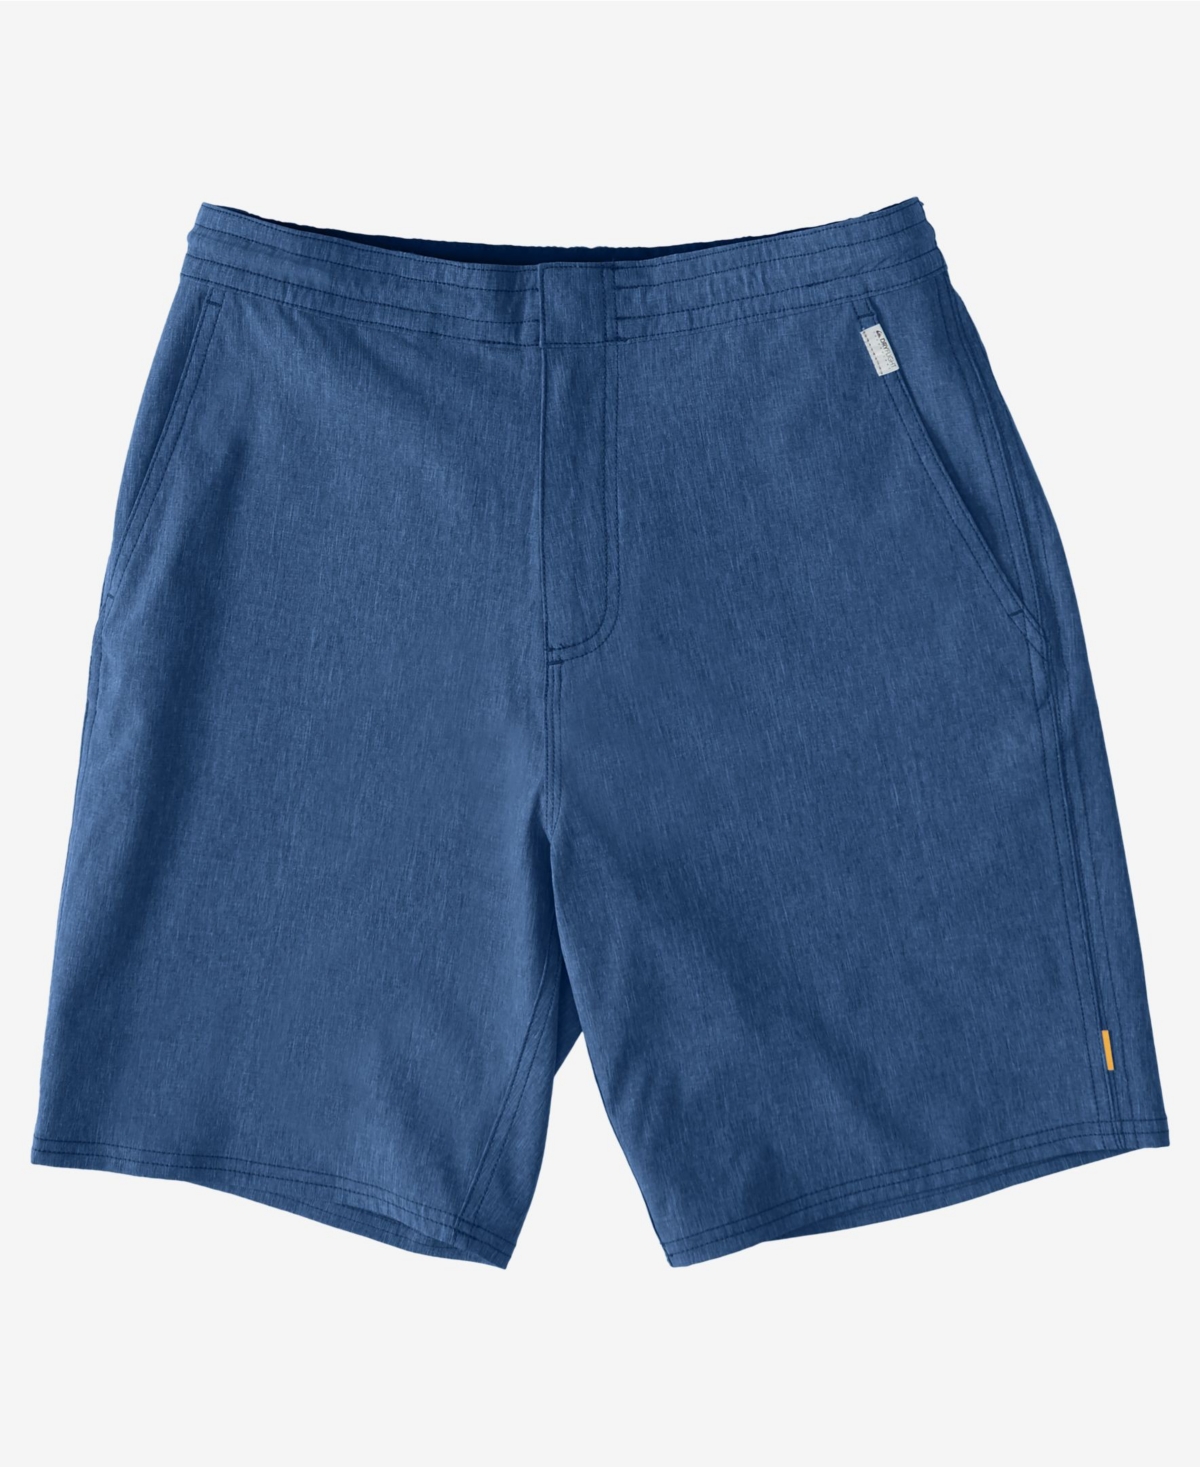 Men's Suva Amphibian Hybrid Shorts - Ensign Blue